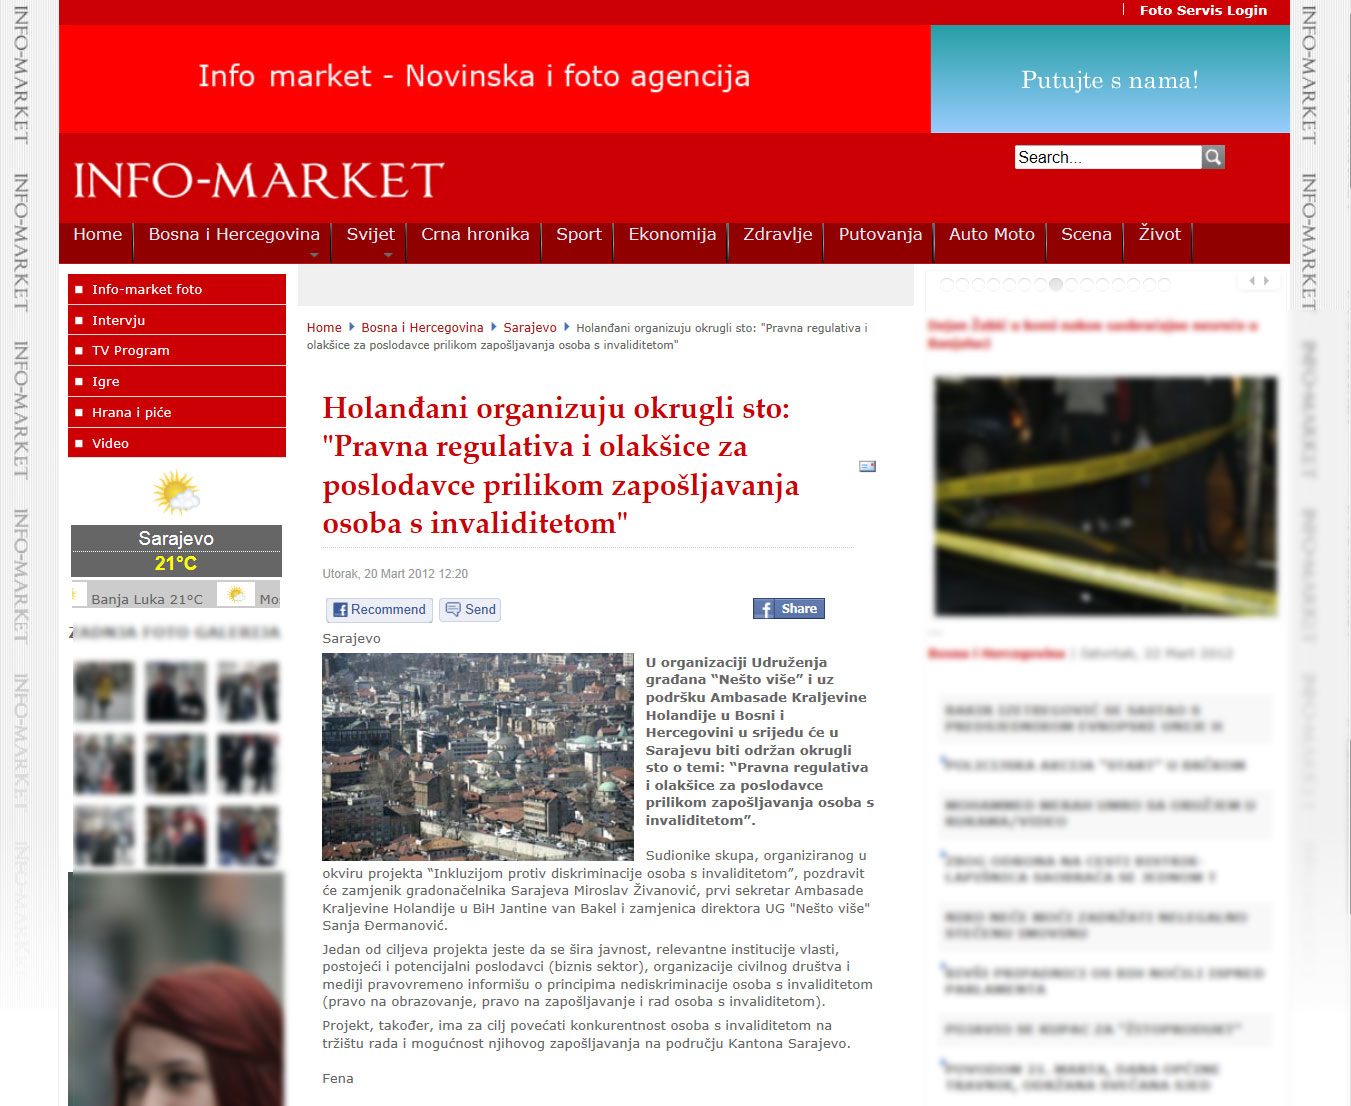 Info-market.ba20mar2012